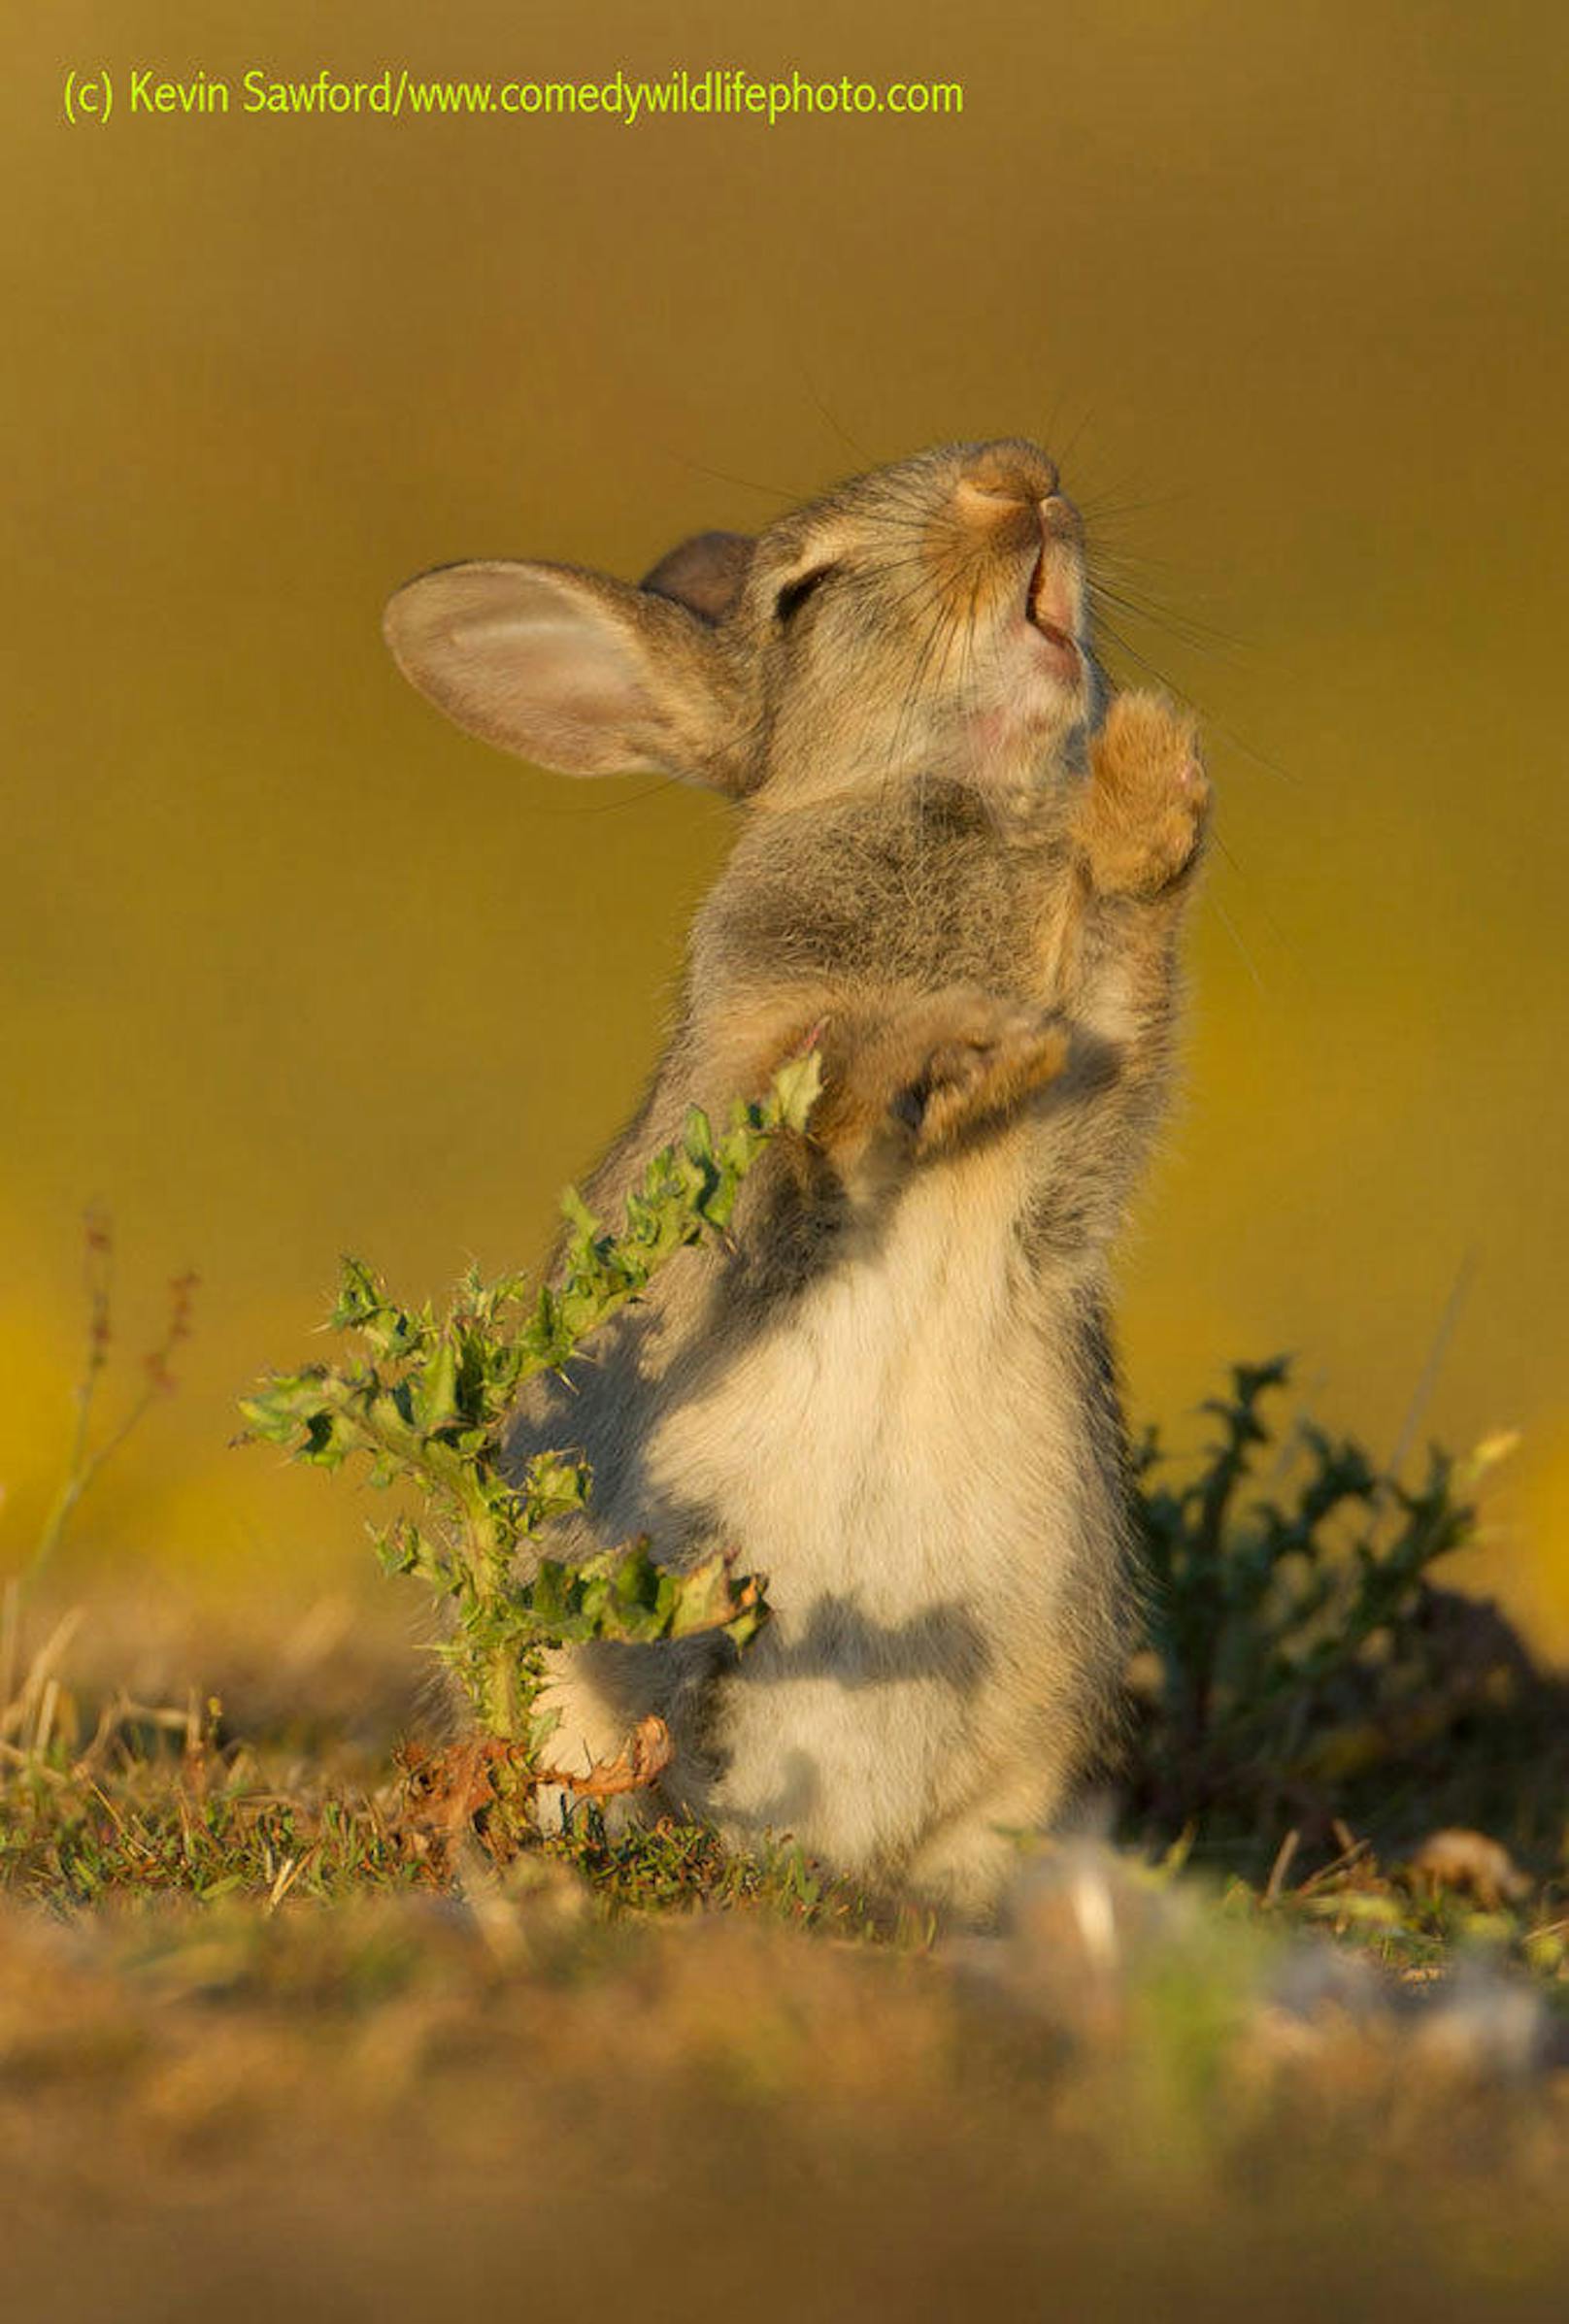 <b>Hase frisst gerade Disteln. Guten Appetit.</b>

"Rabbit eating a thistle" von Kevin-Sawford